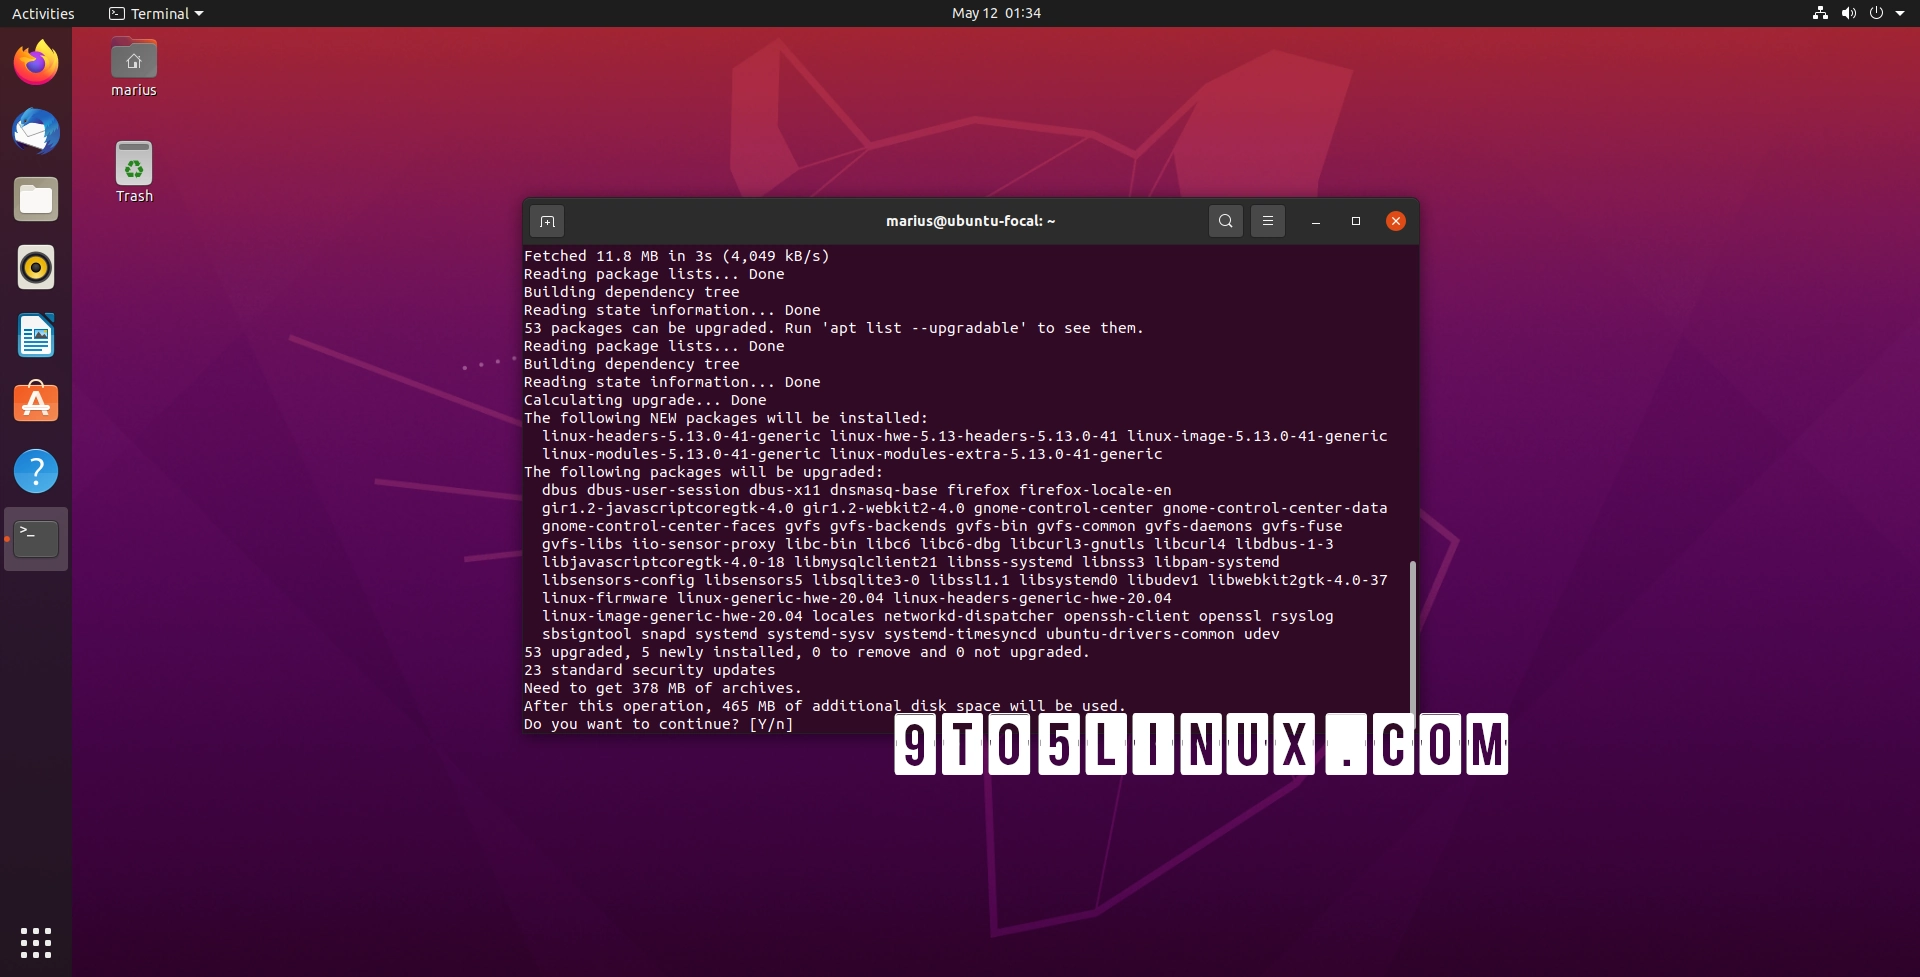 New Ubuntu Linux Kernel Security Updates Patch 17 Vulnerabilities